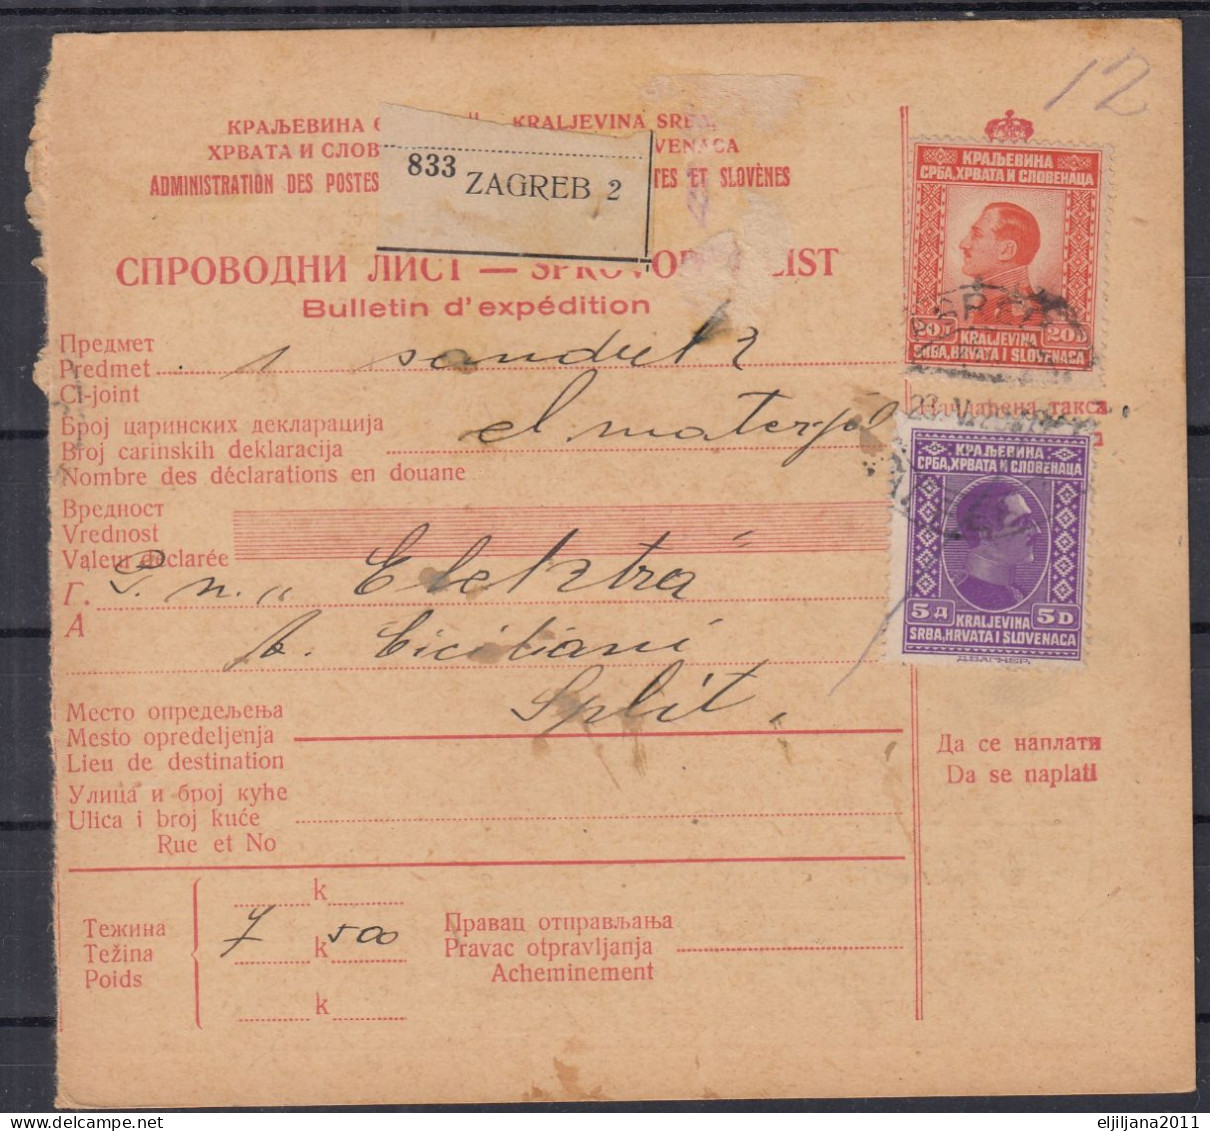 ⁕ Kingdom Of Yugoslavia 1928 ⁕ Parcel Post - Receipt ( Sprovodni List ) Electrical Material ⁕ Zagreb To Split - Covers & Documents